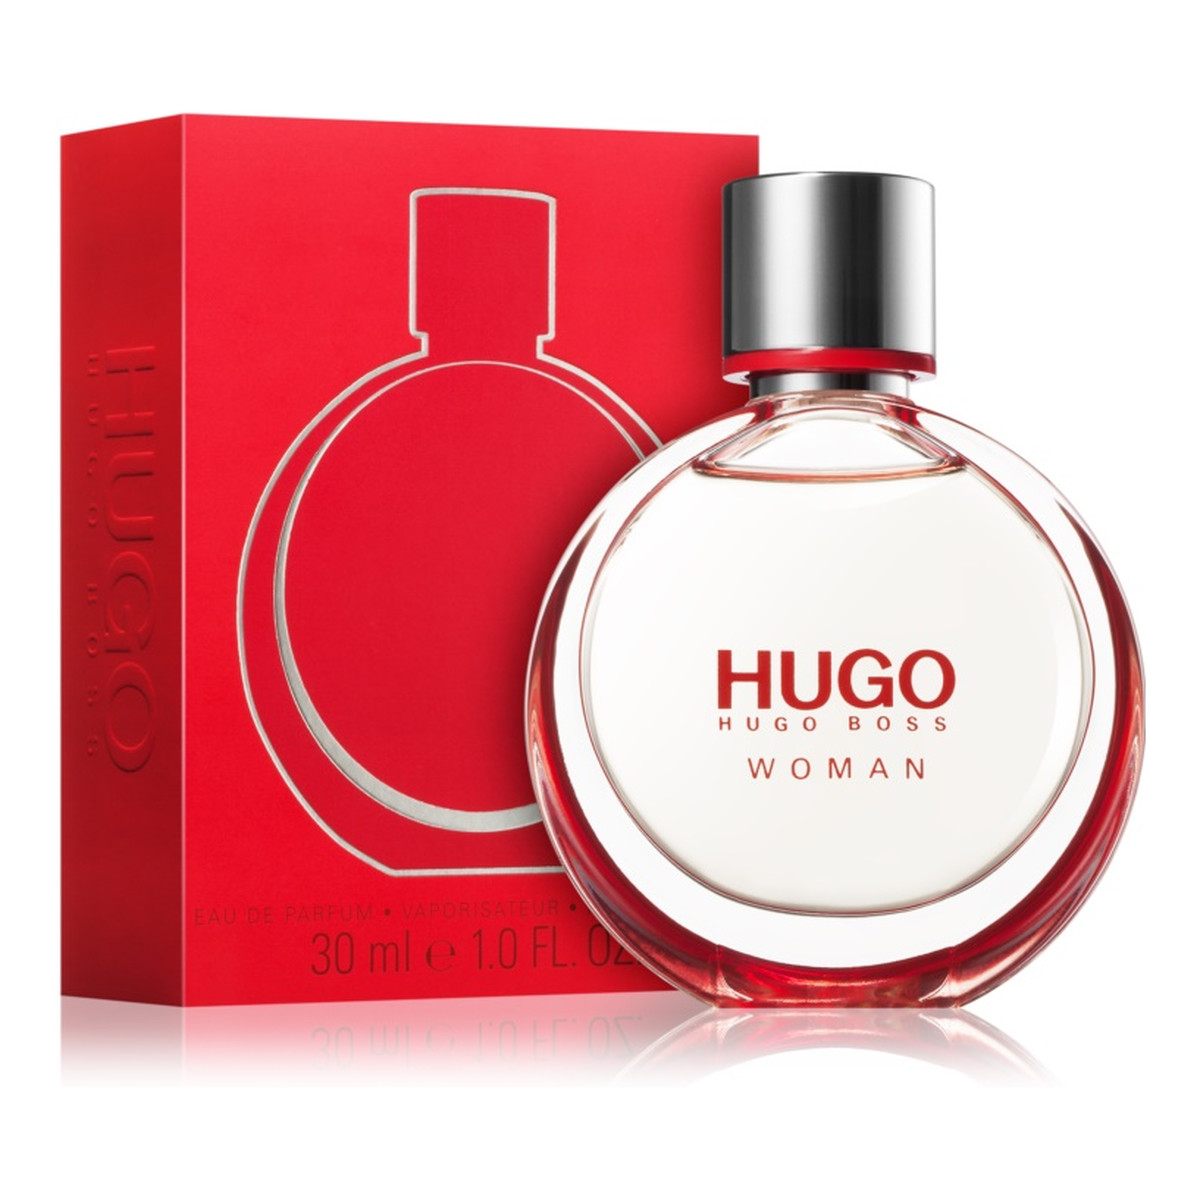 Hugo Boss Hugo Woman woda perfumowana 30ml